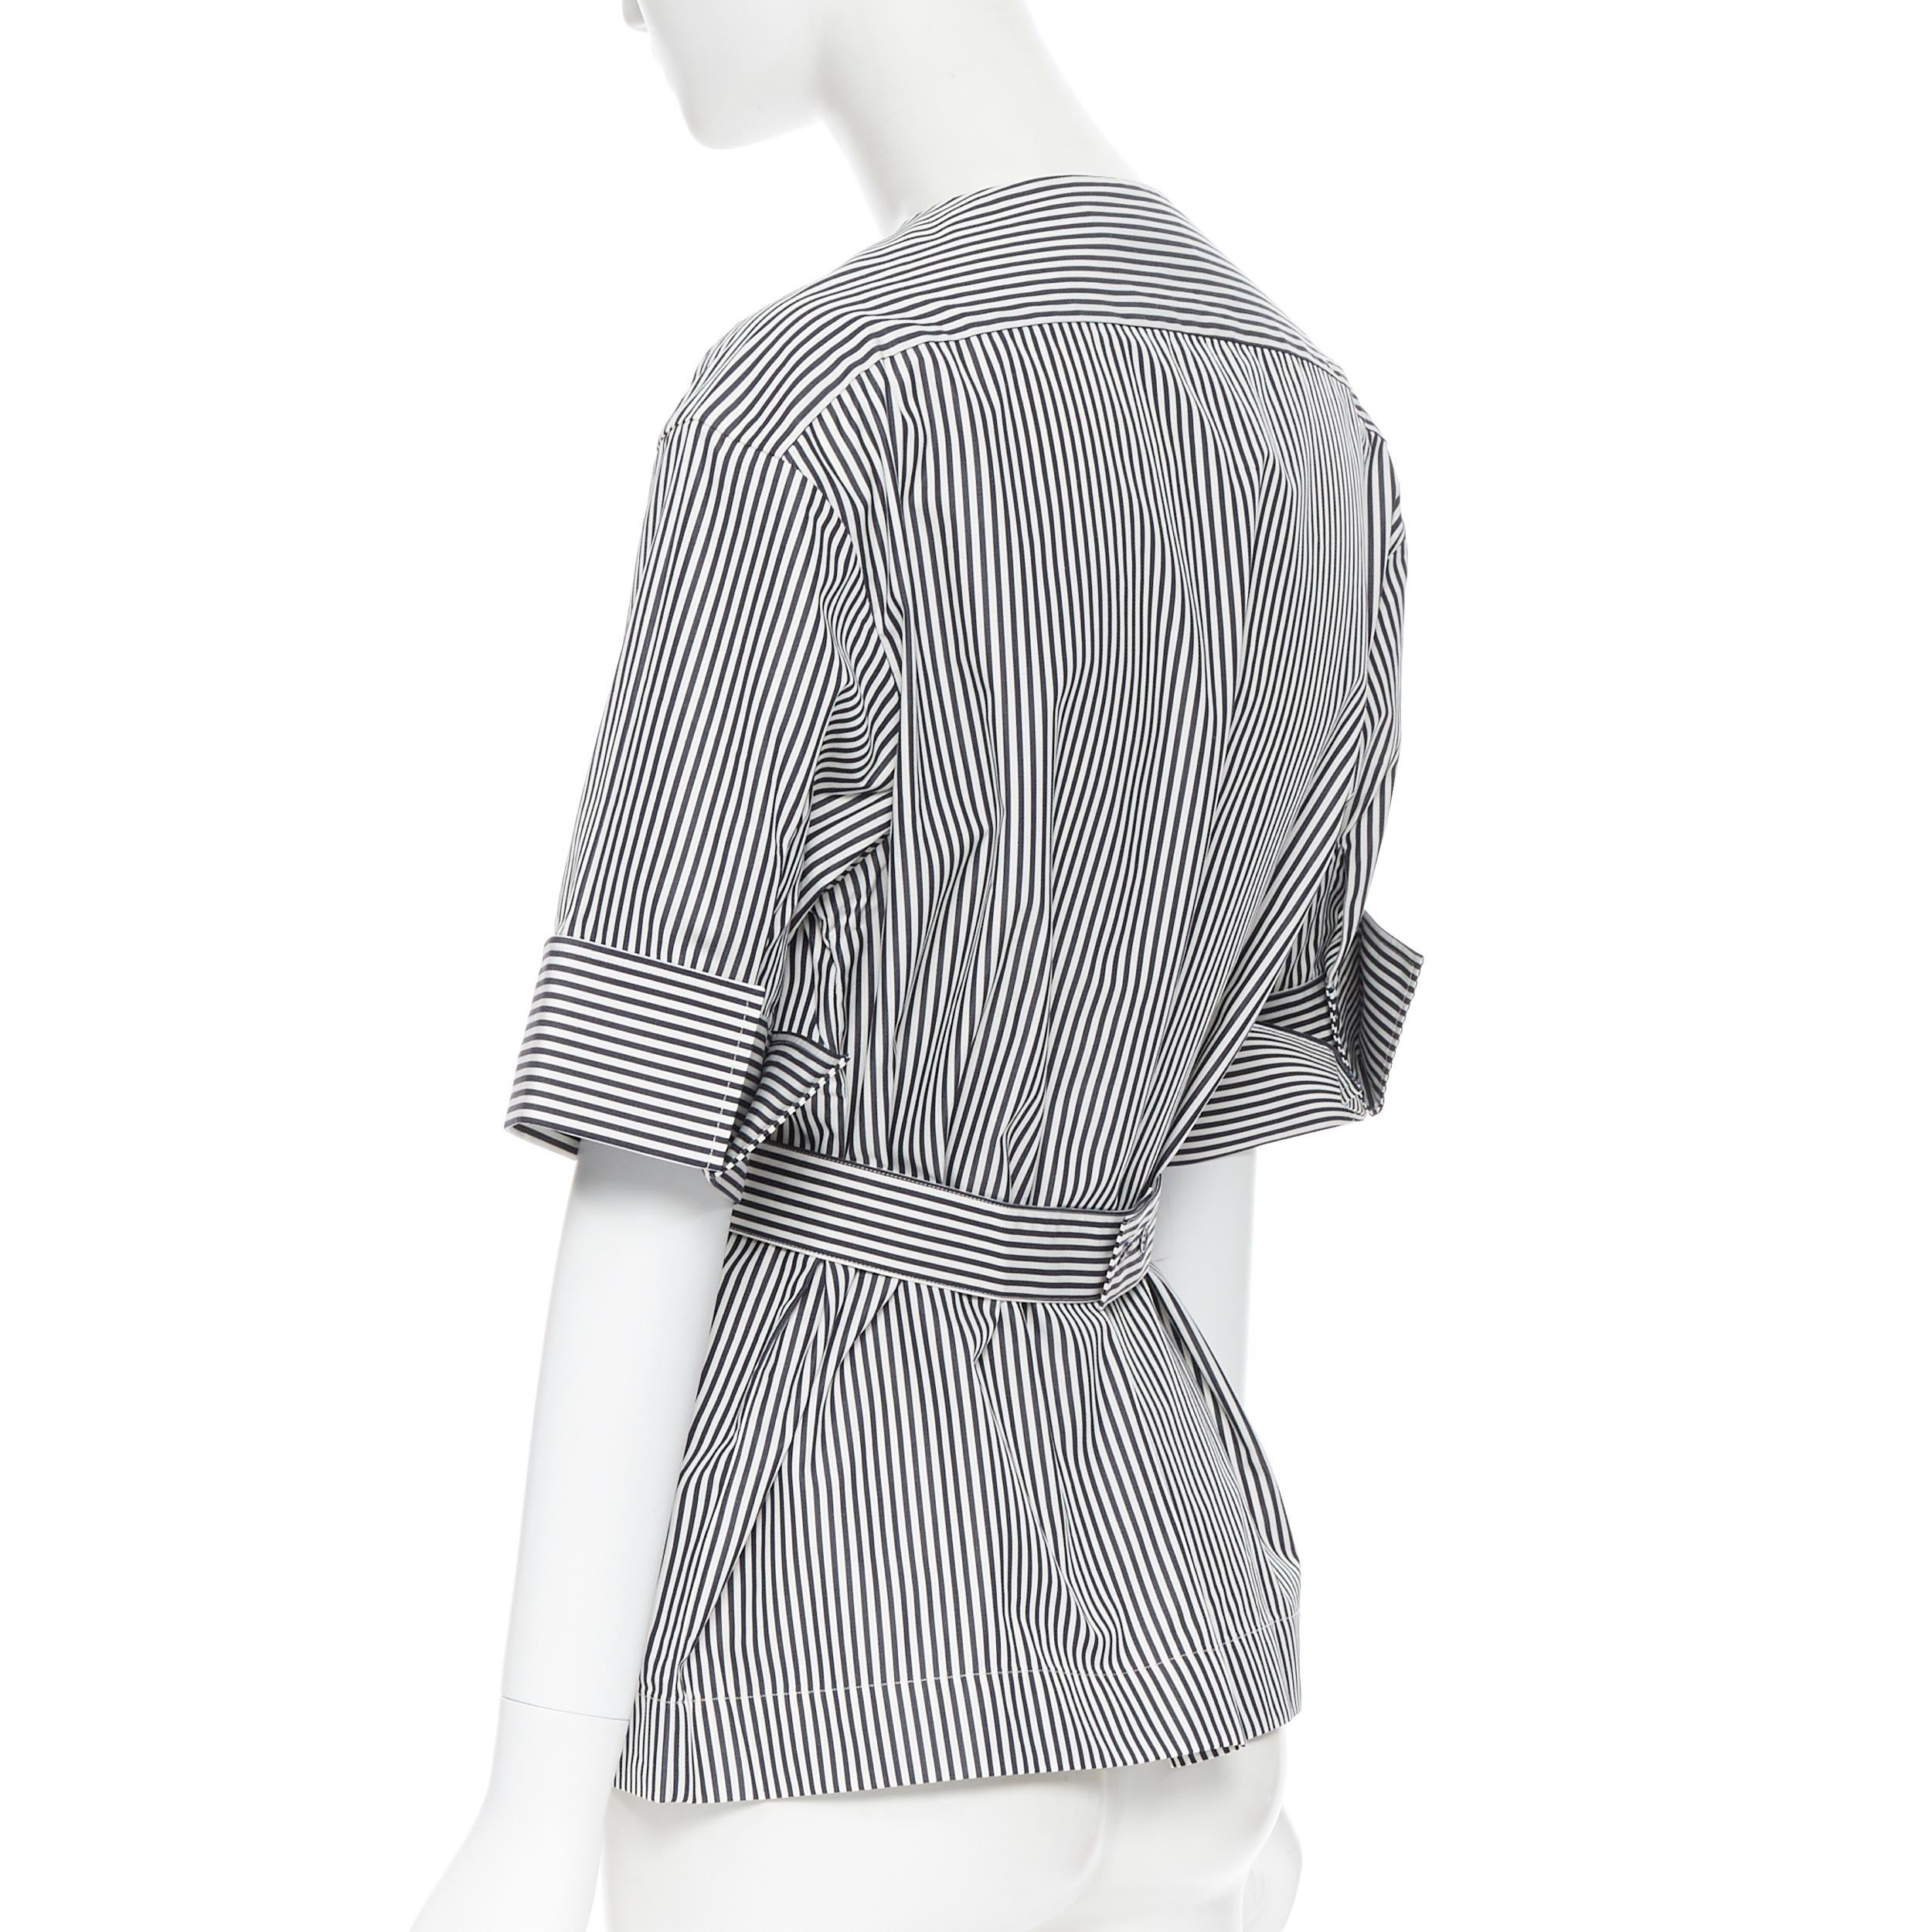 PALMER HARDING 100% cotton navy white contrast stripe cinched waist shirt UK6 XS 1